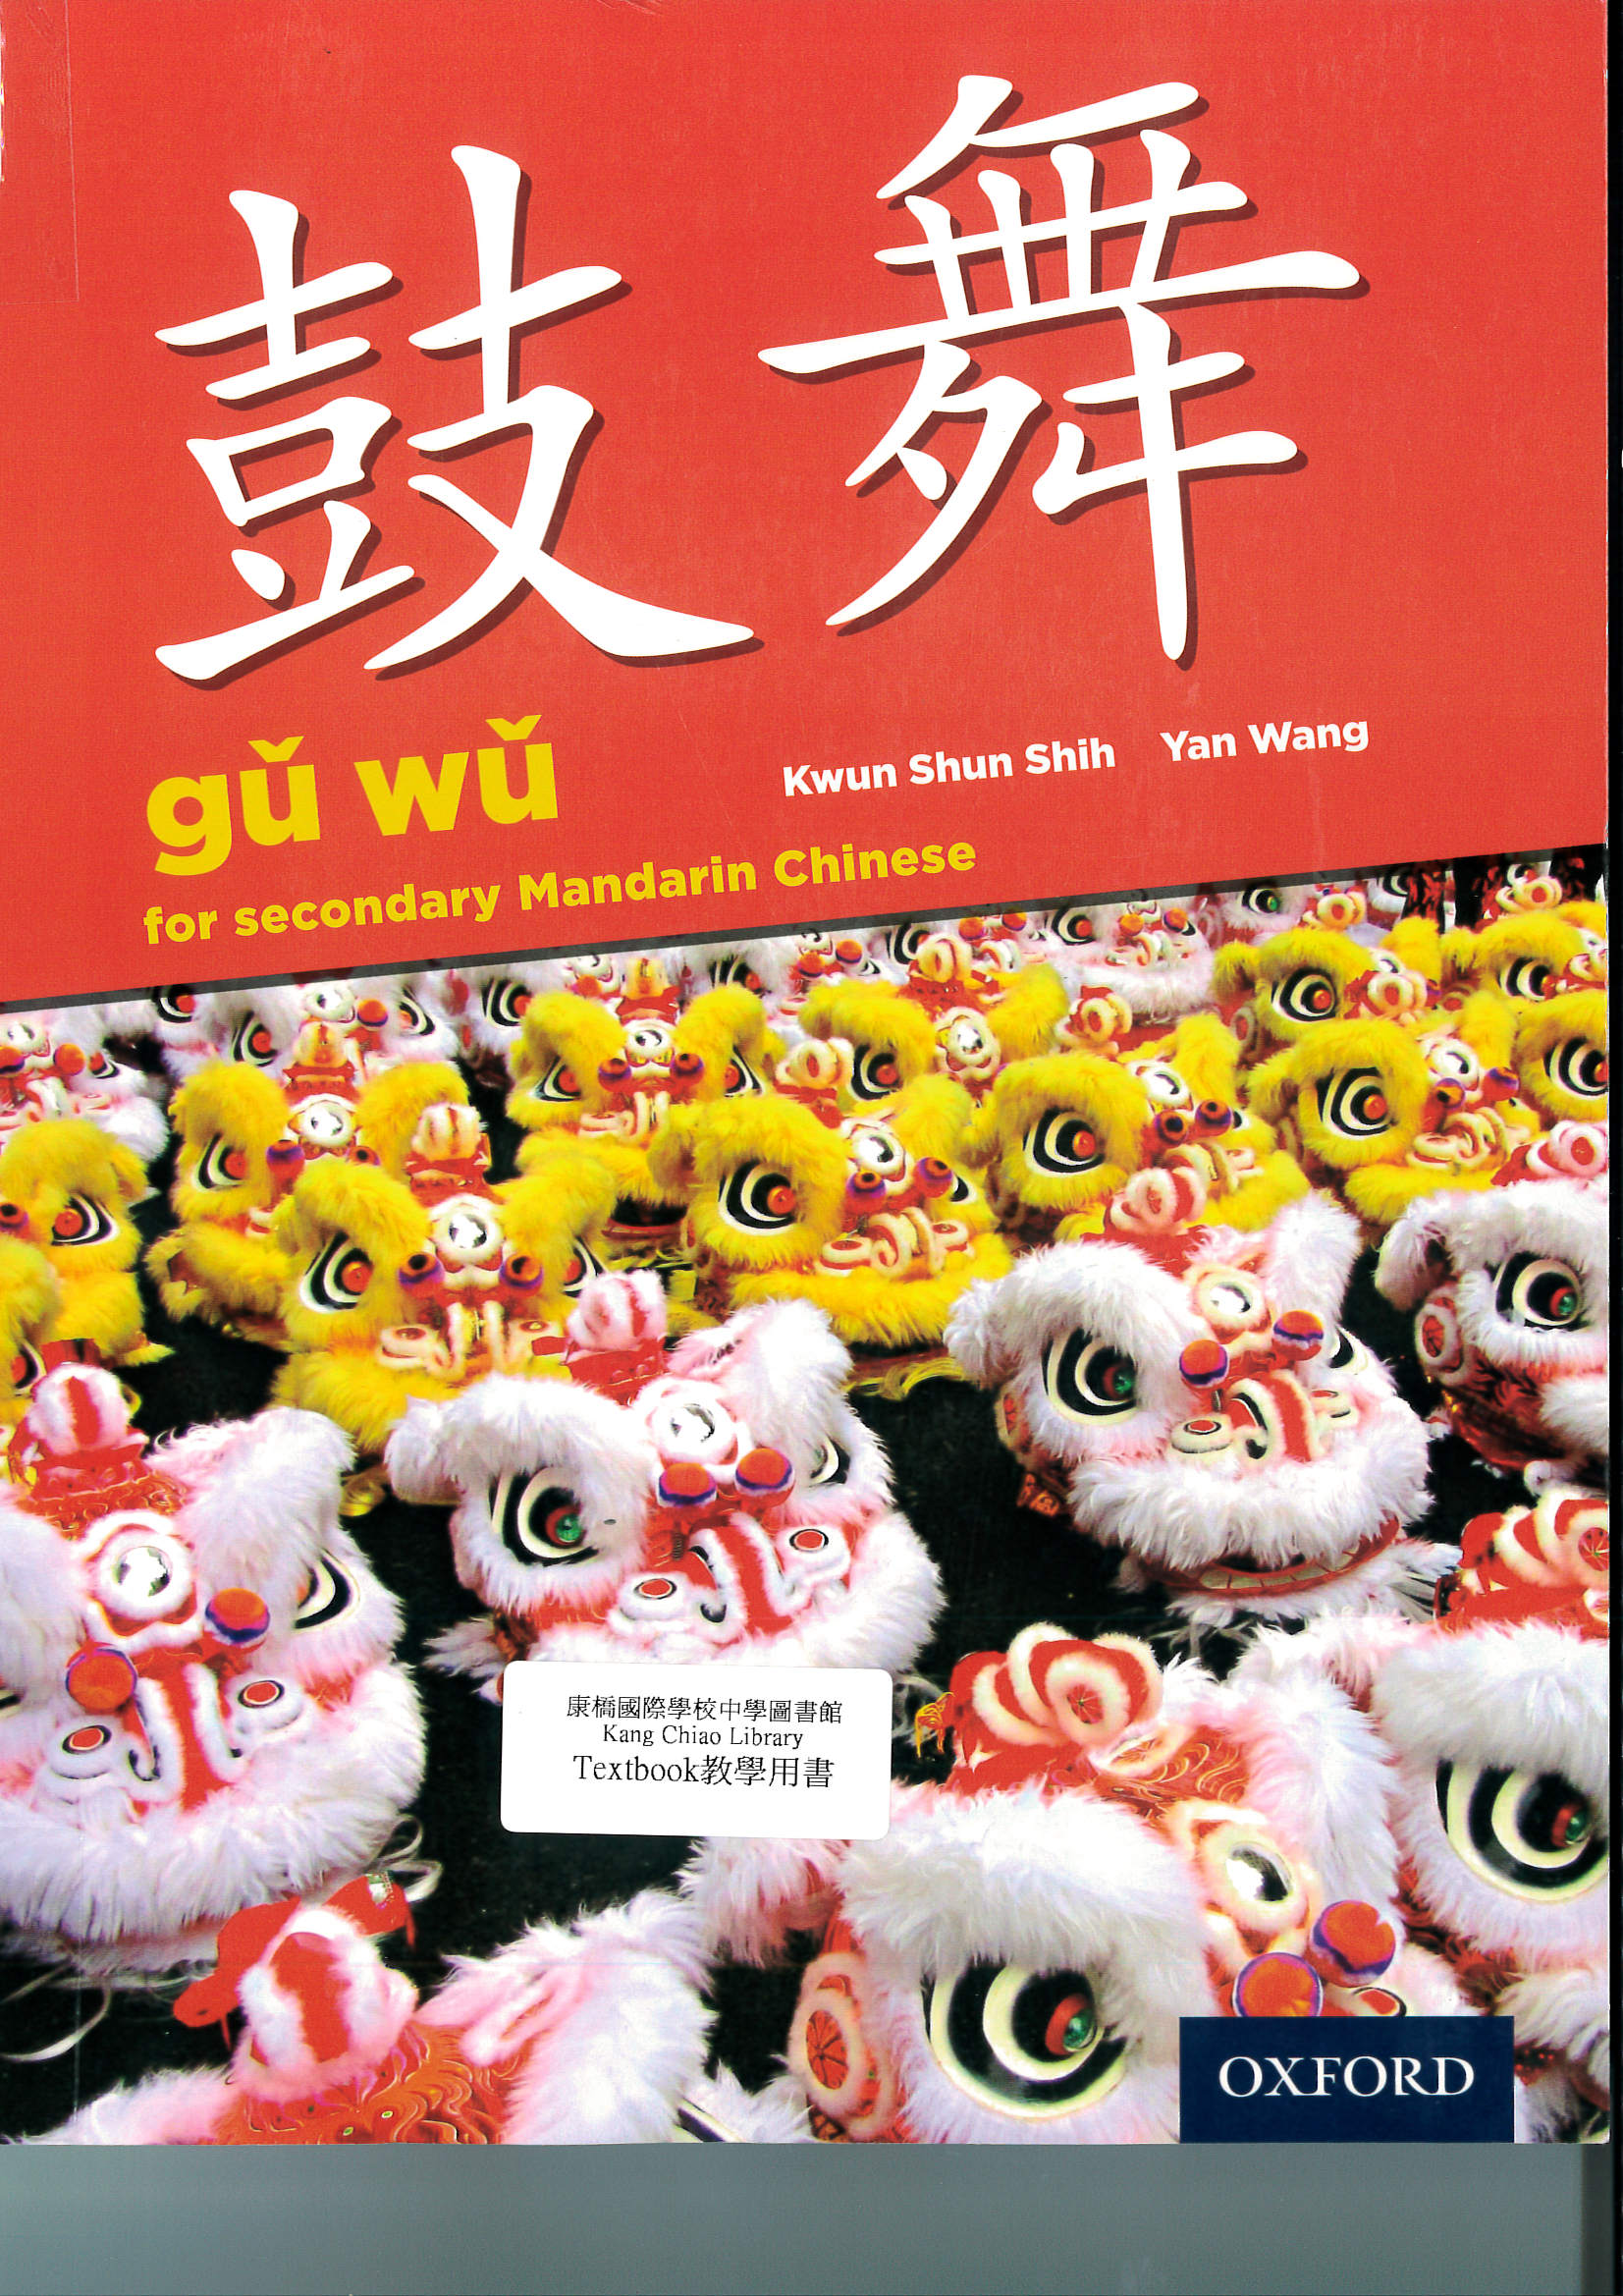 Gu wu for secondary Mandarin Chinese